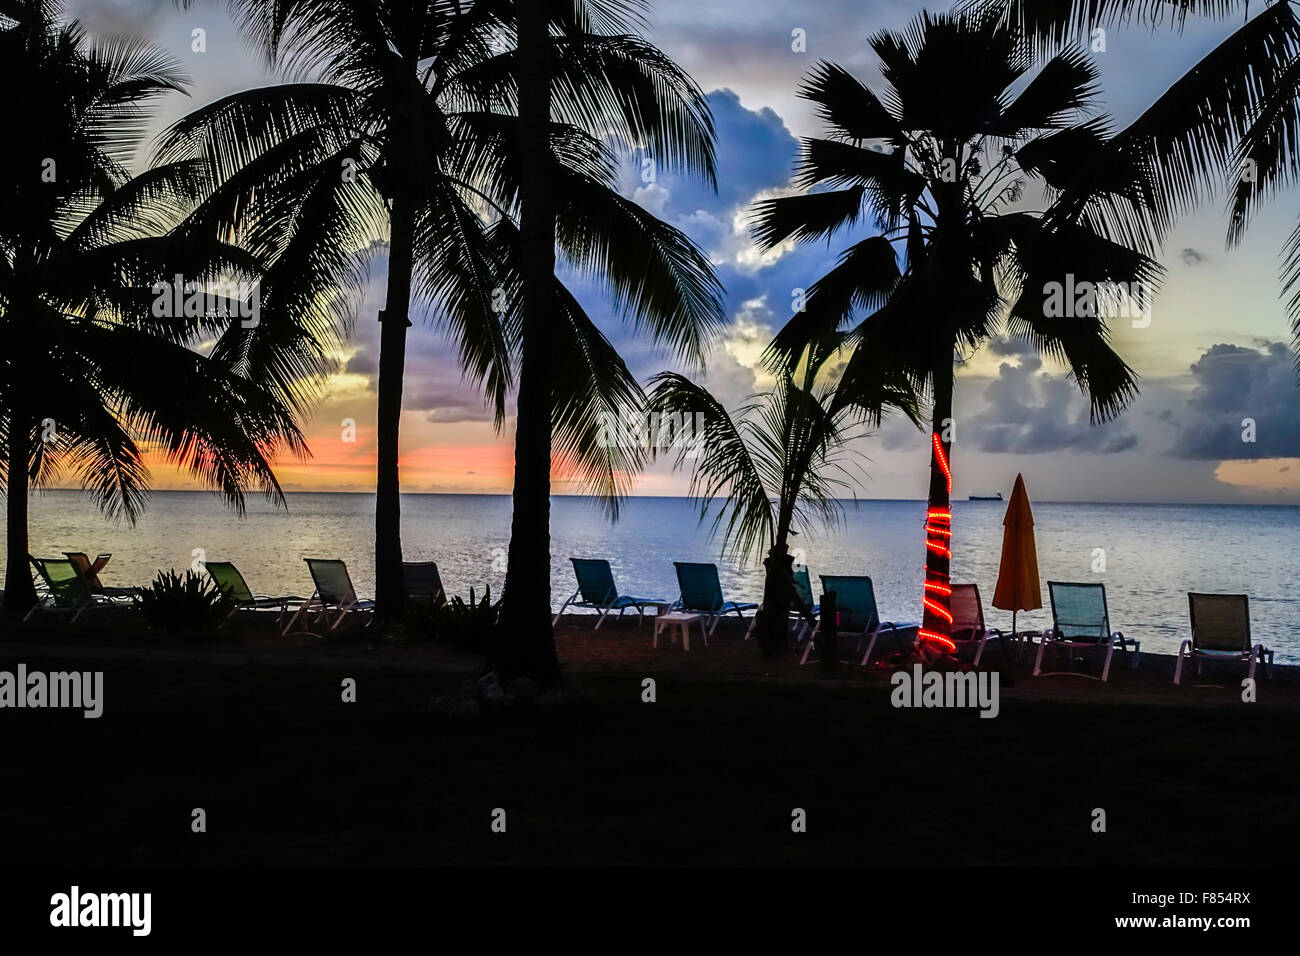 Landscape beachside resort Caribbean Sea beach chairs palm trees sunset. St. Croix, U.S. Virgin Islands. Stock Photo